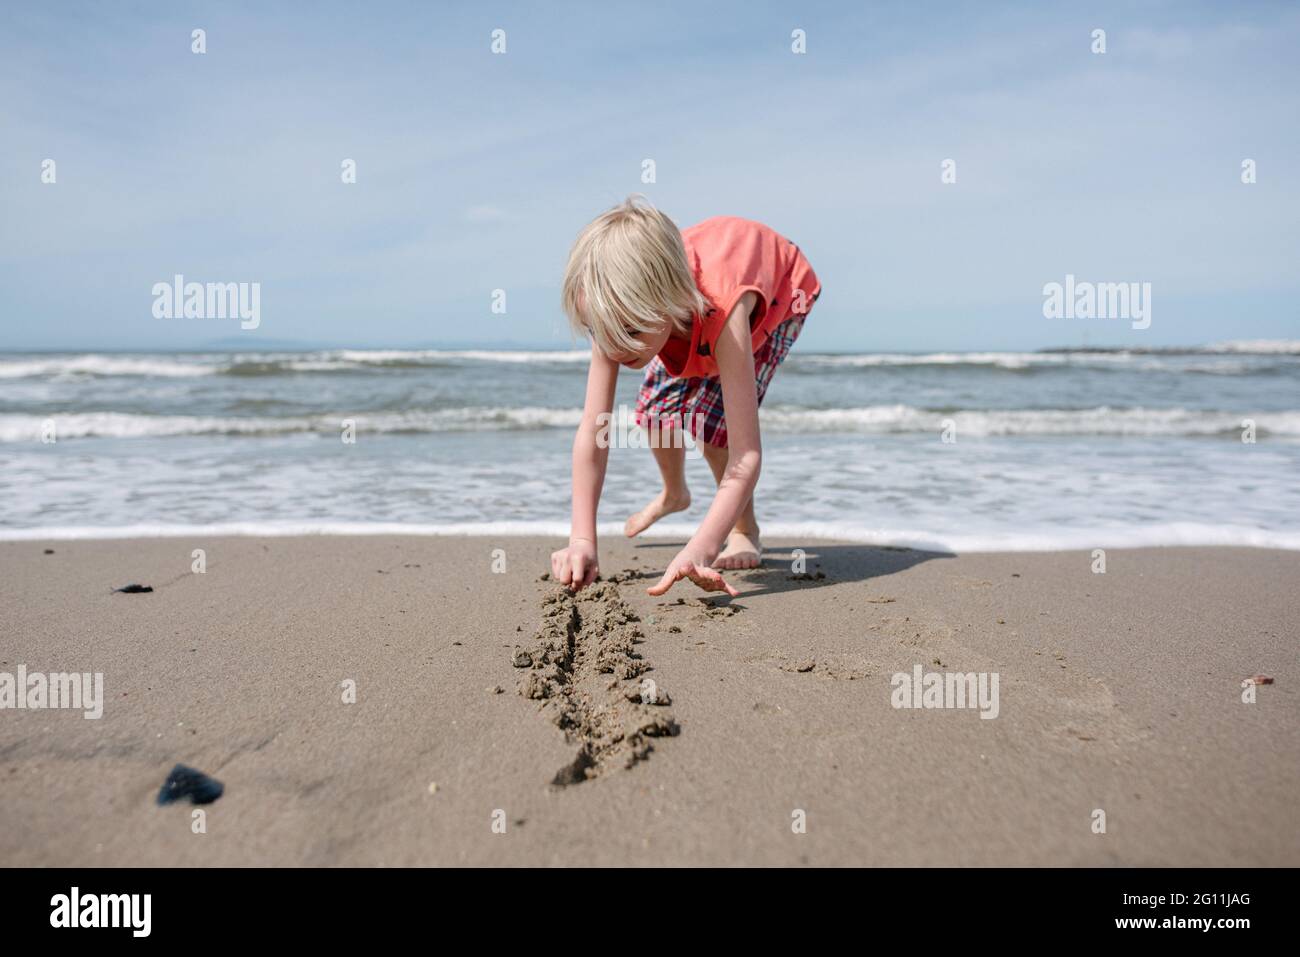 USA, California, Ventura, Boy playing on beach Stock Photo